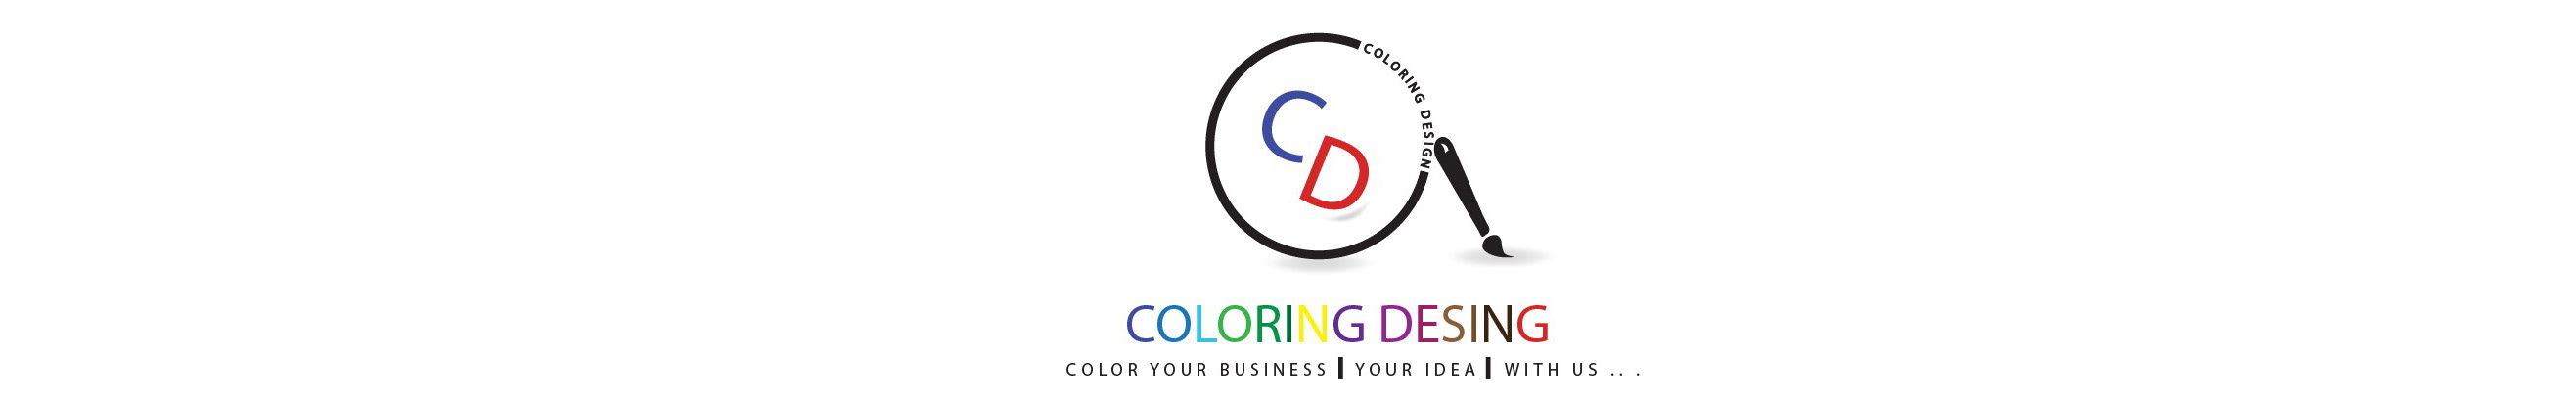 Coloring - Design のプロファイルバナー